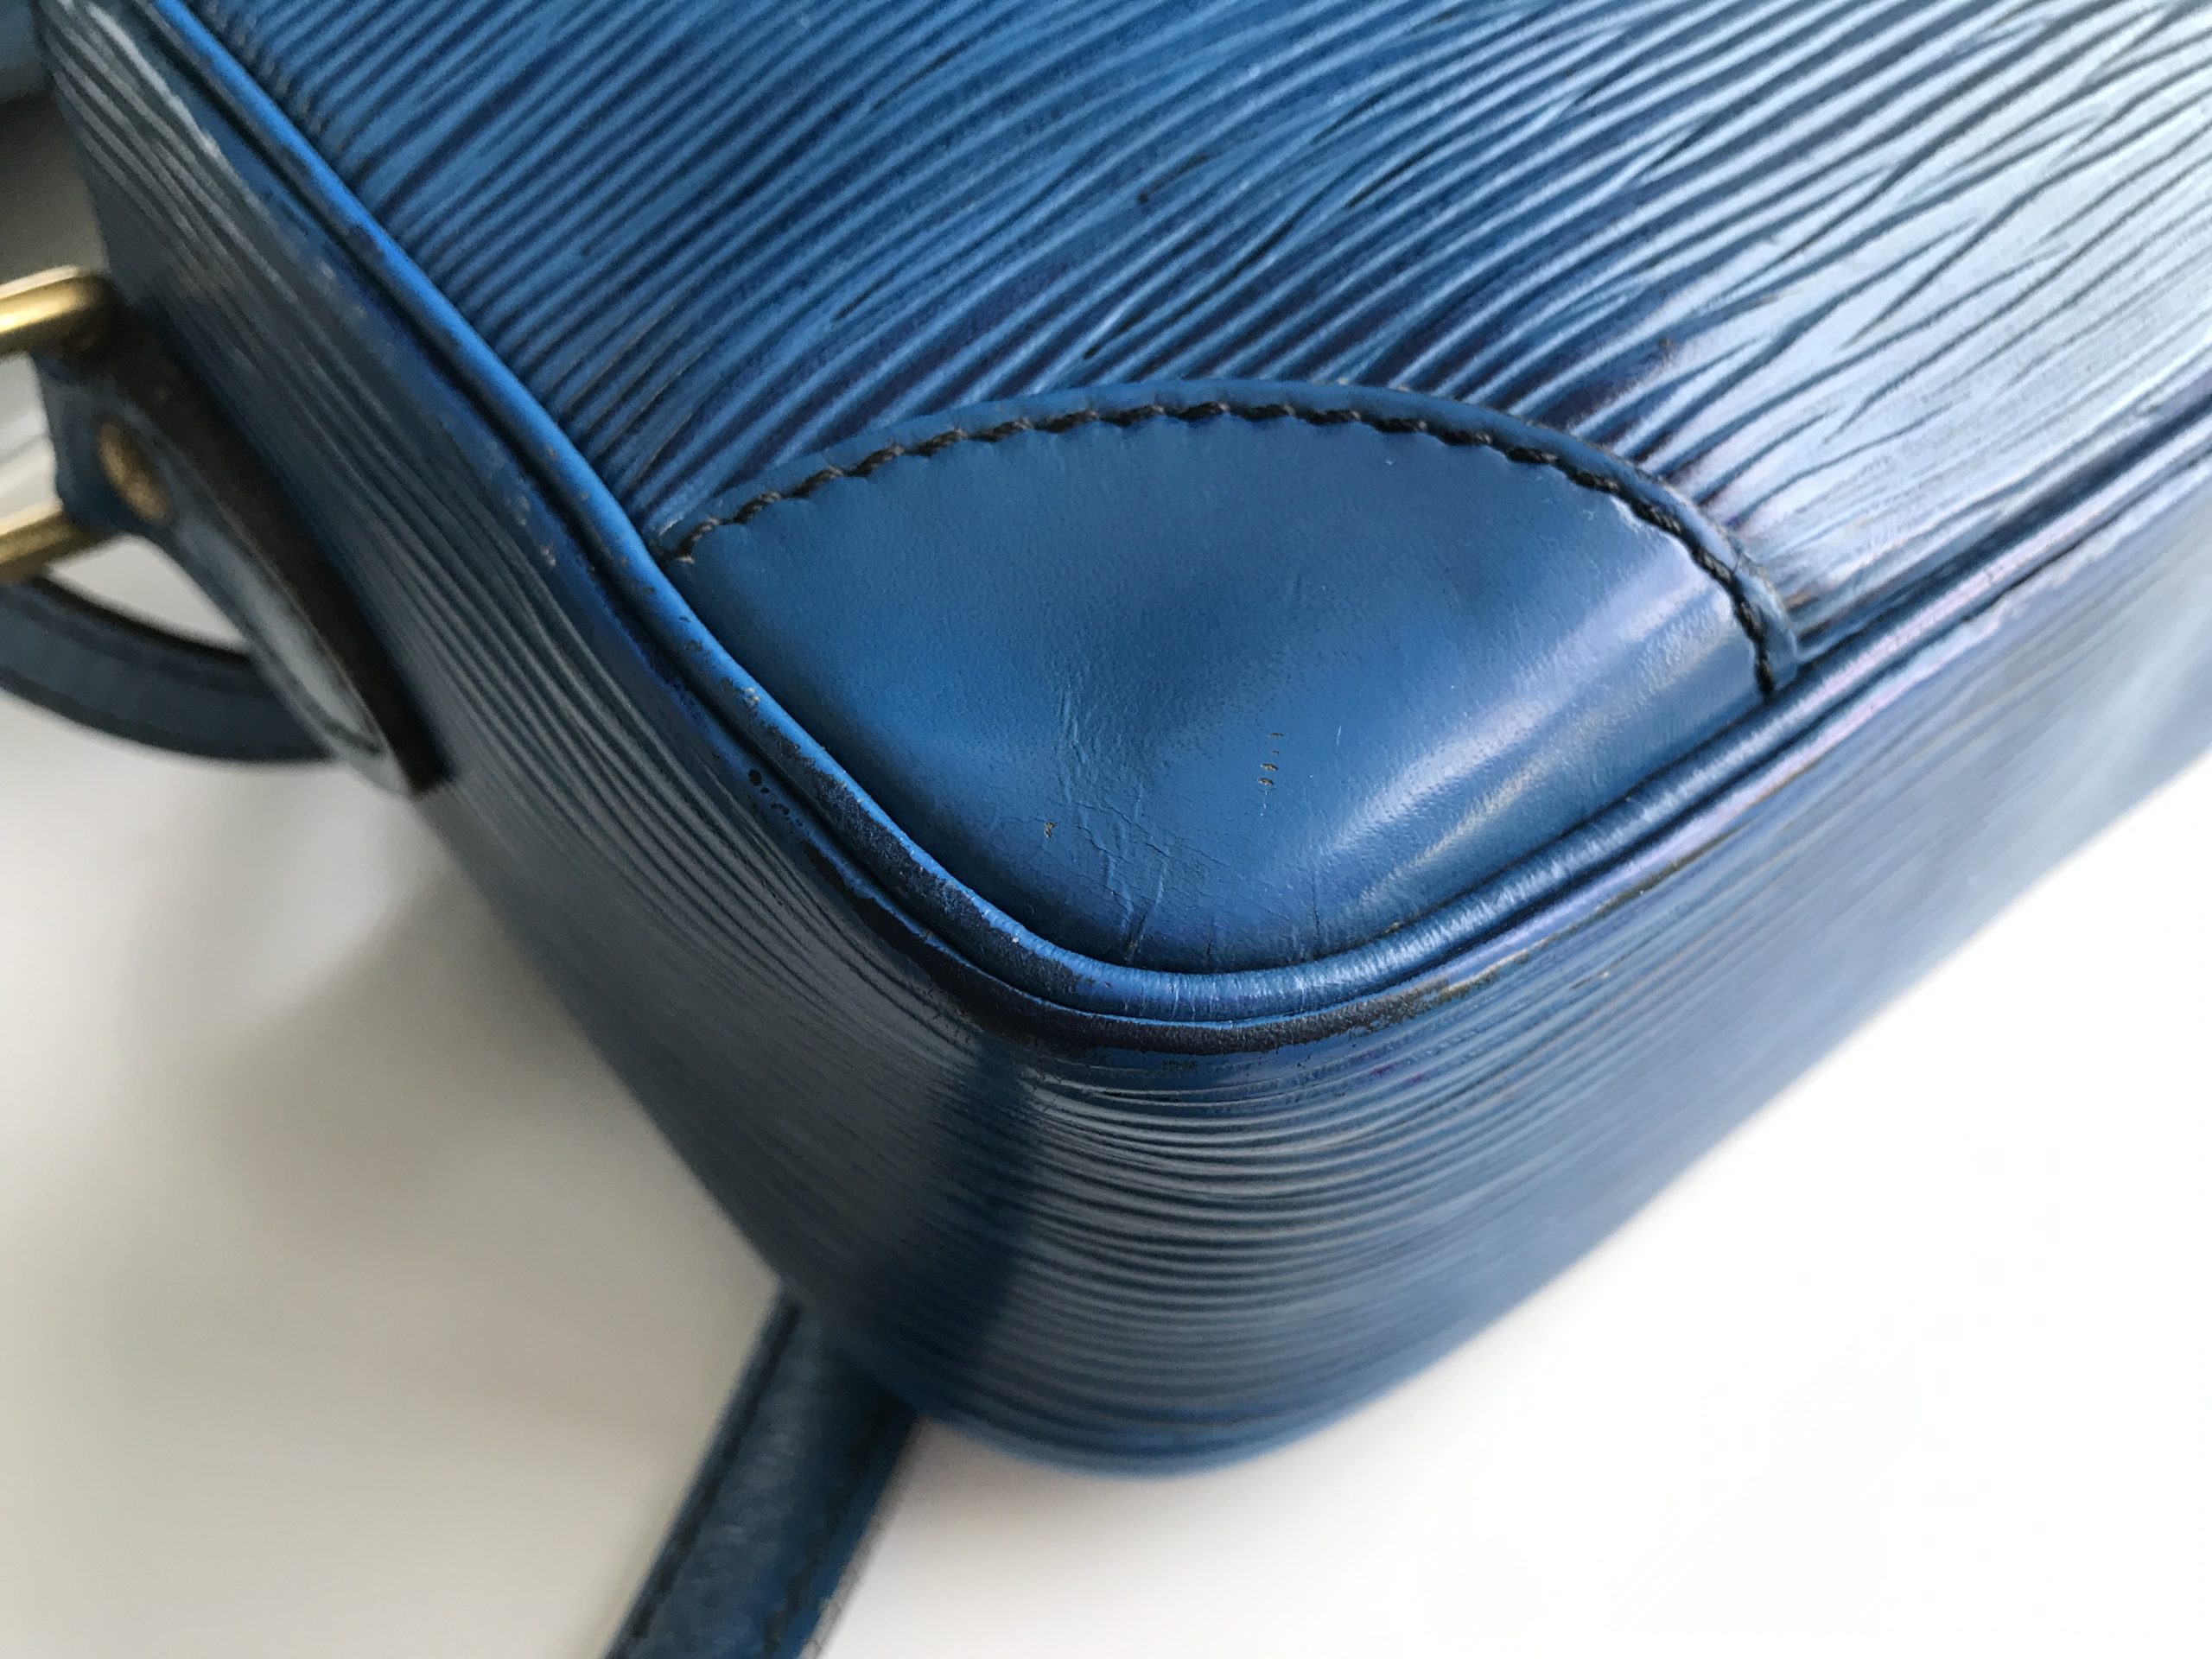 Louis Vuitton, Bags, Lv Blue Epi Leather Trocadero Crossbody Bag